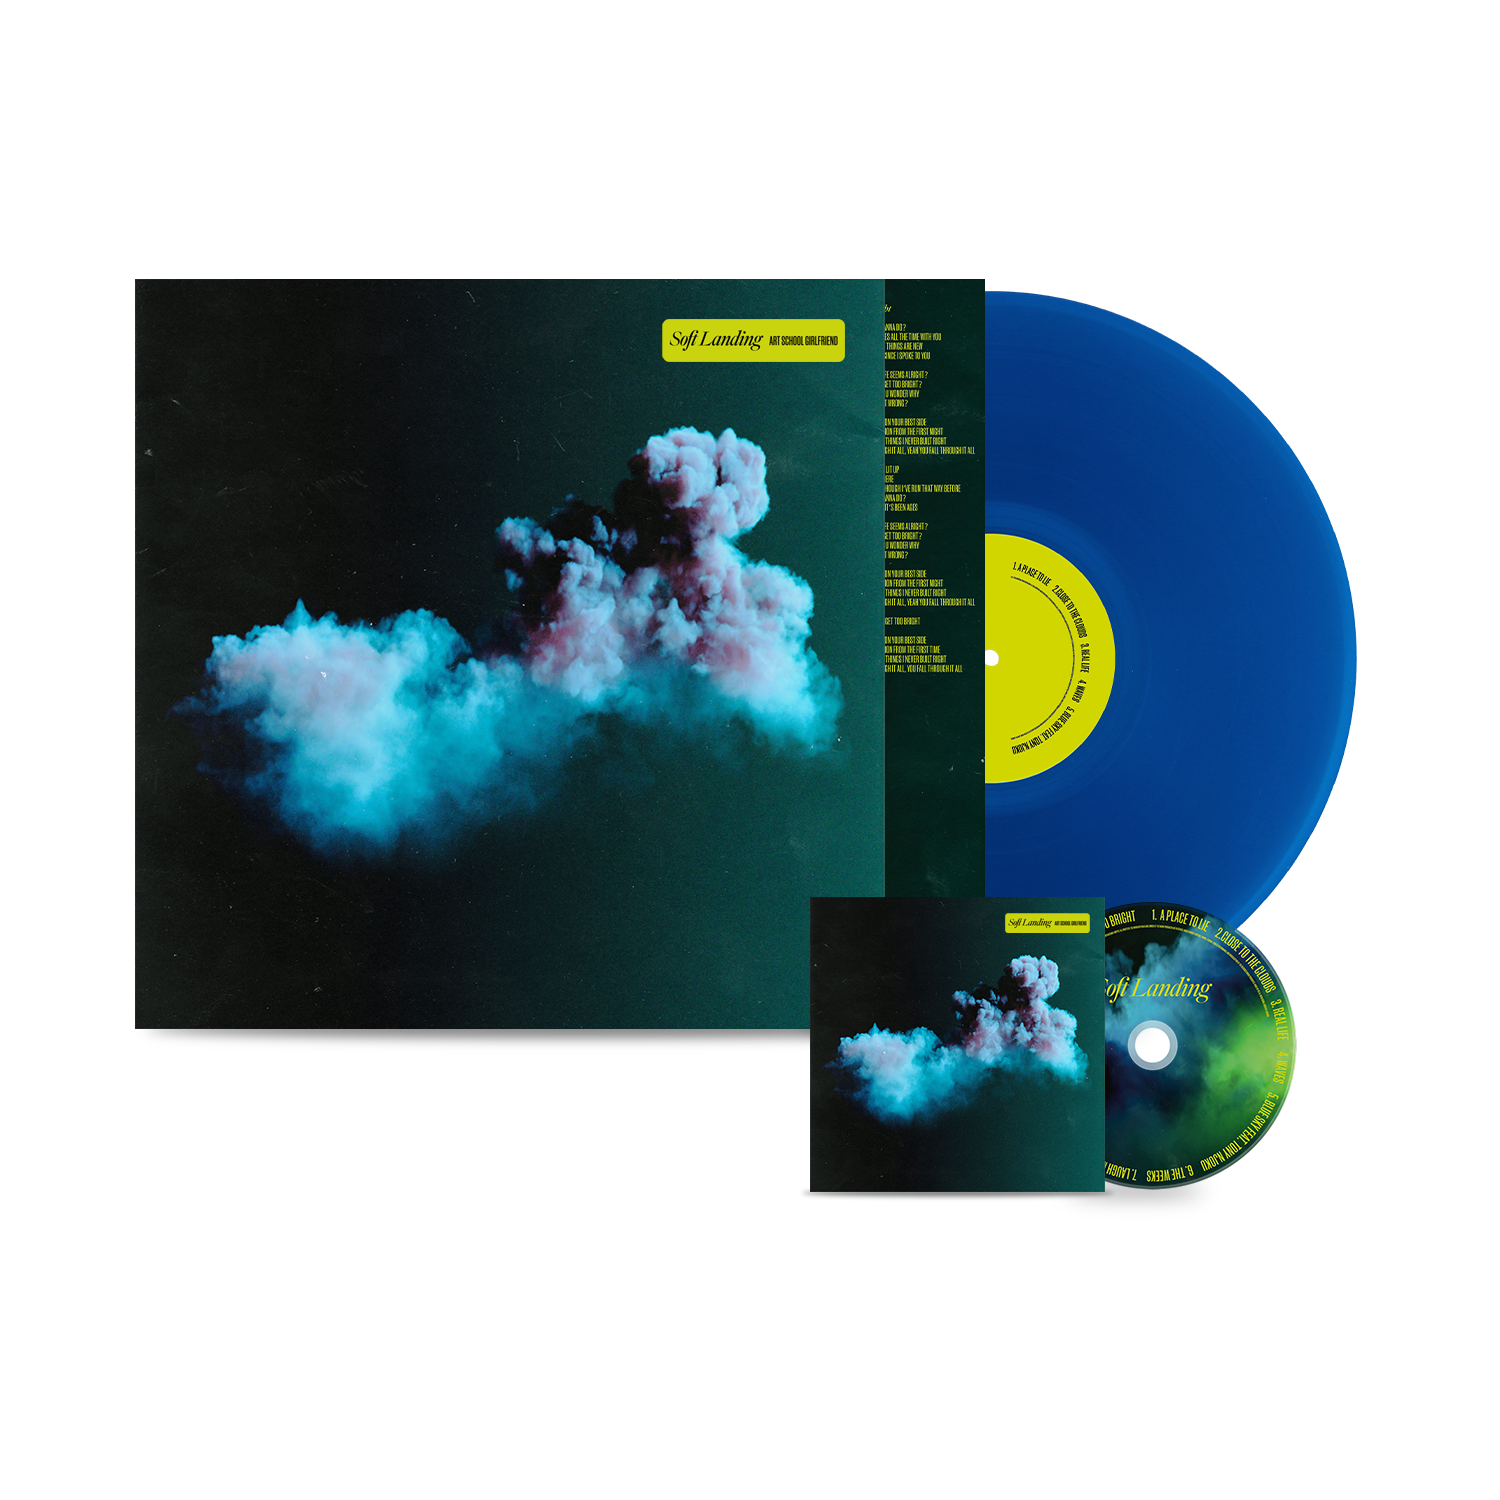 Soft Landing: Limited Blue Vinyl LP + CD